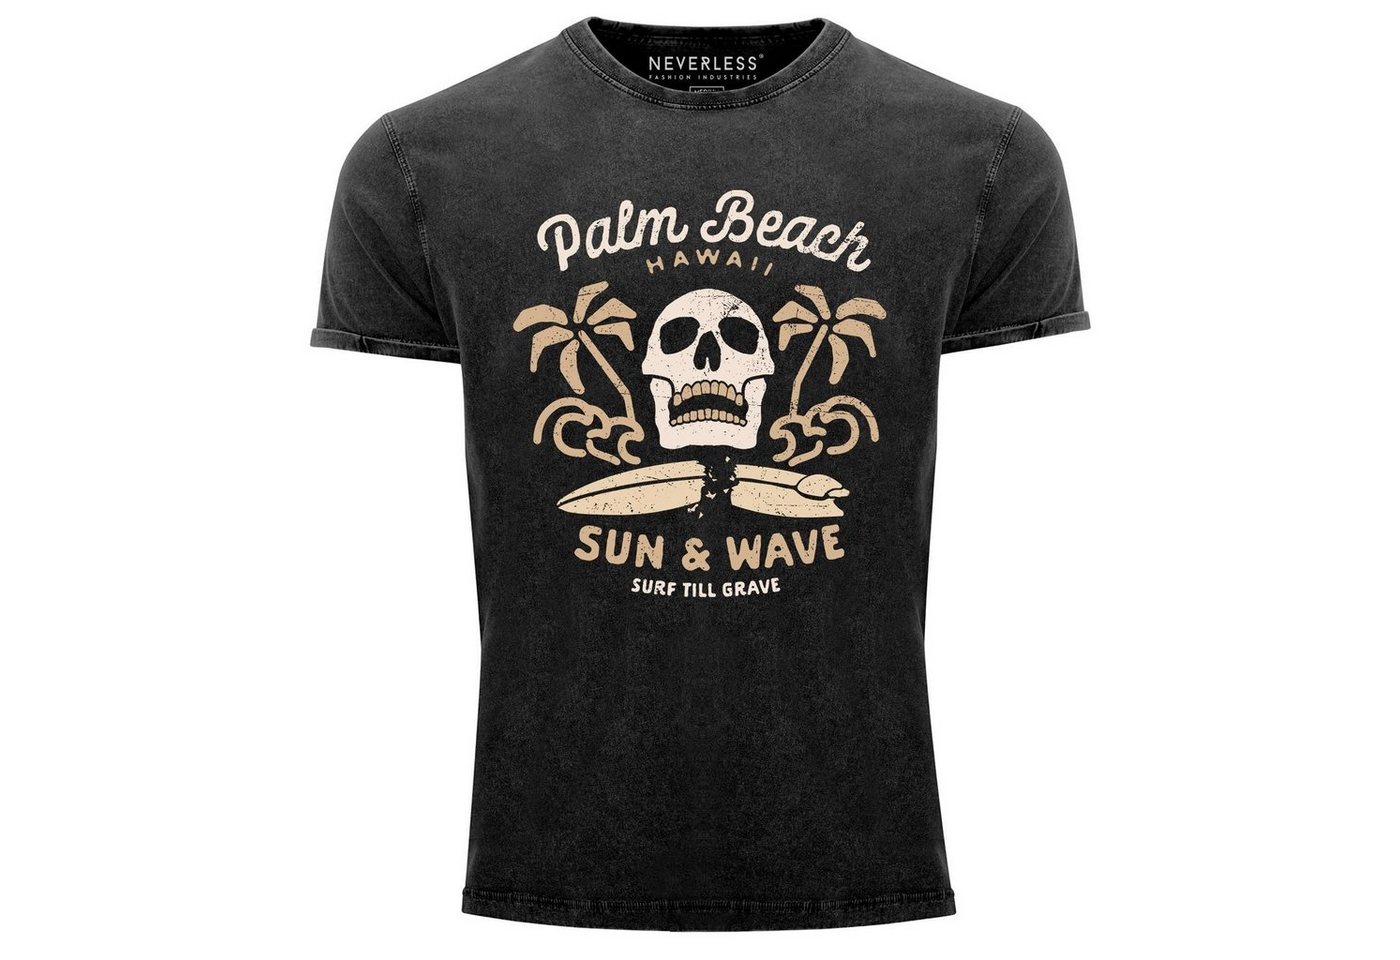 Neverless Print-Shirt »Neverless® Herren T-Shirt Surf-Motiv Totenkopf Palm Beach Vintage Shirt« mit Print von Neverless